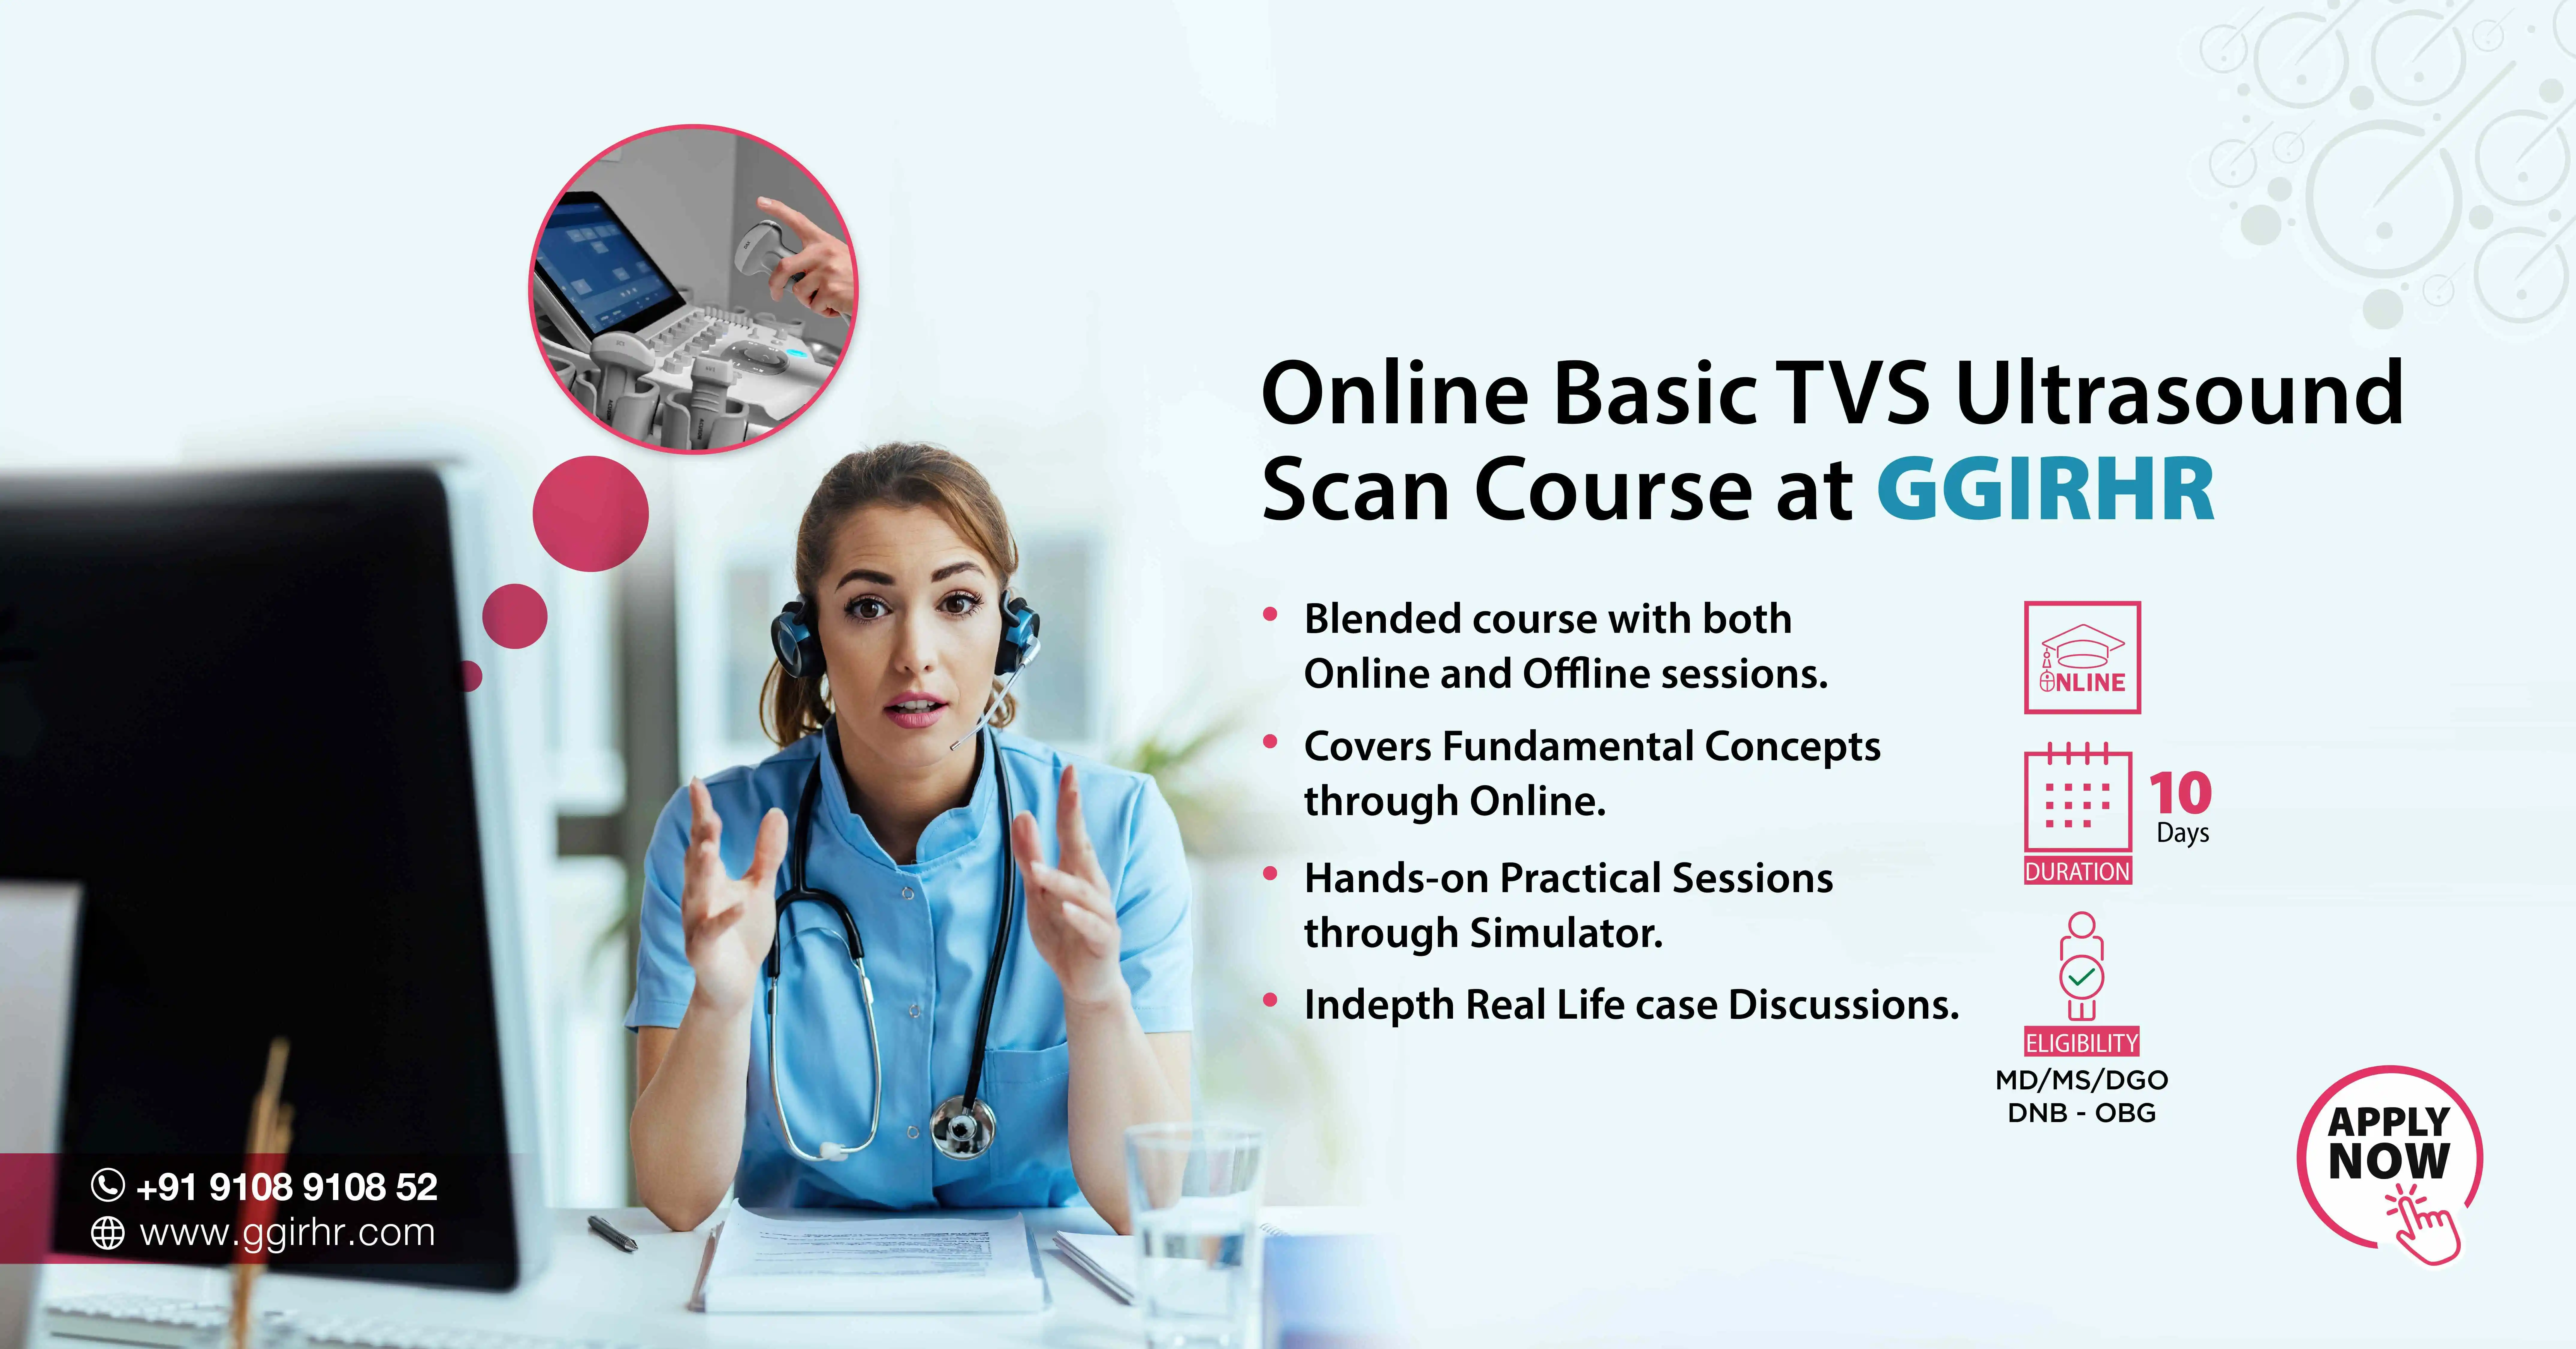 Online Basic TVS Ultrasound Scan Course